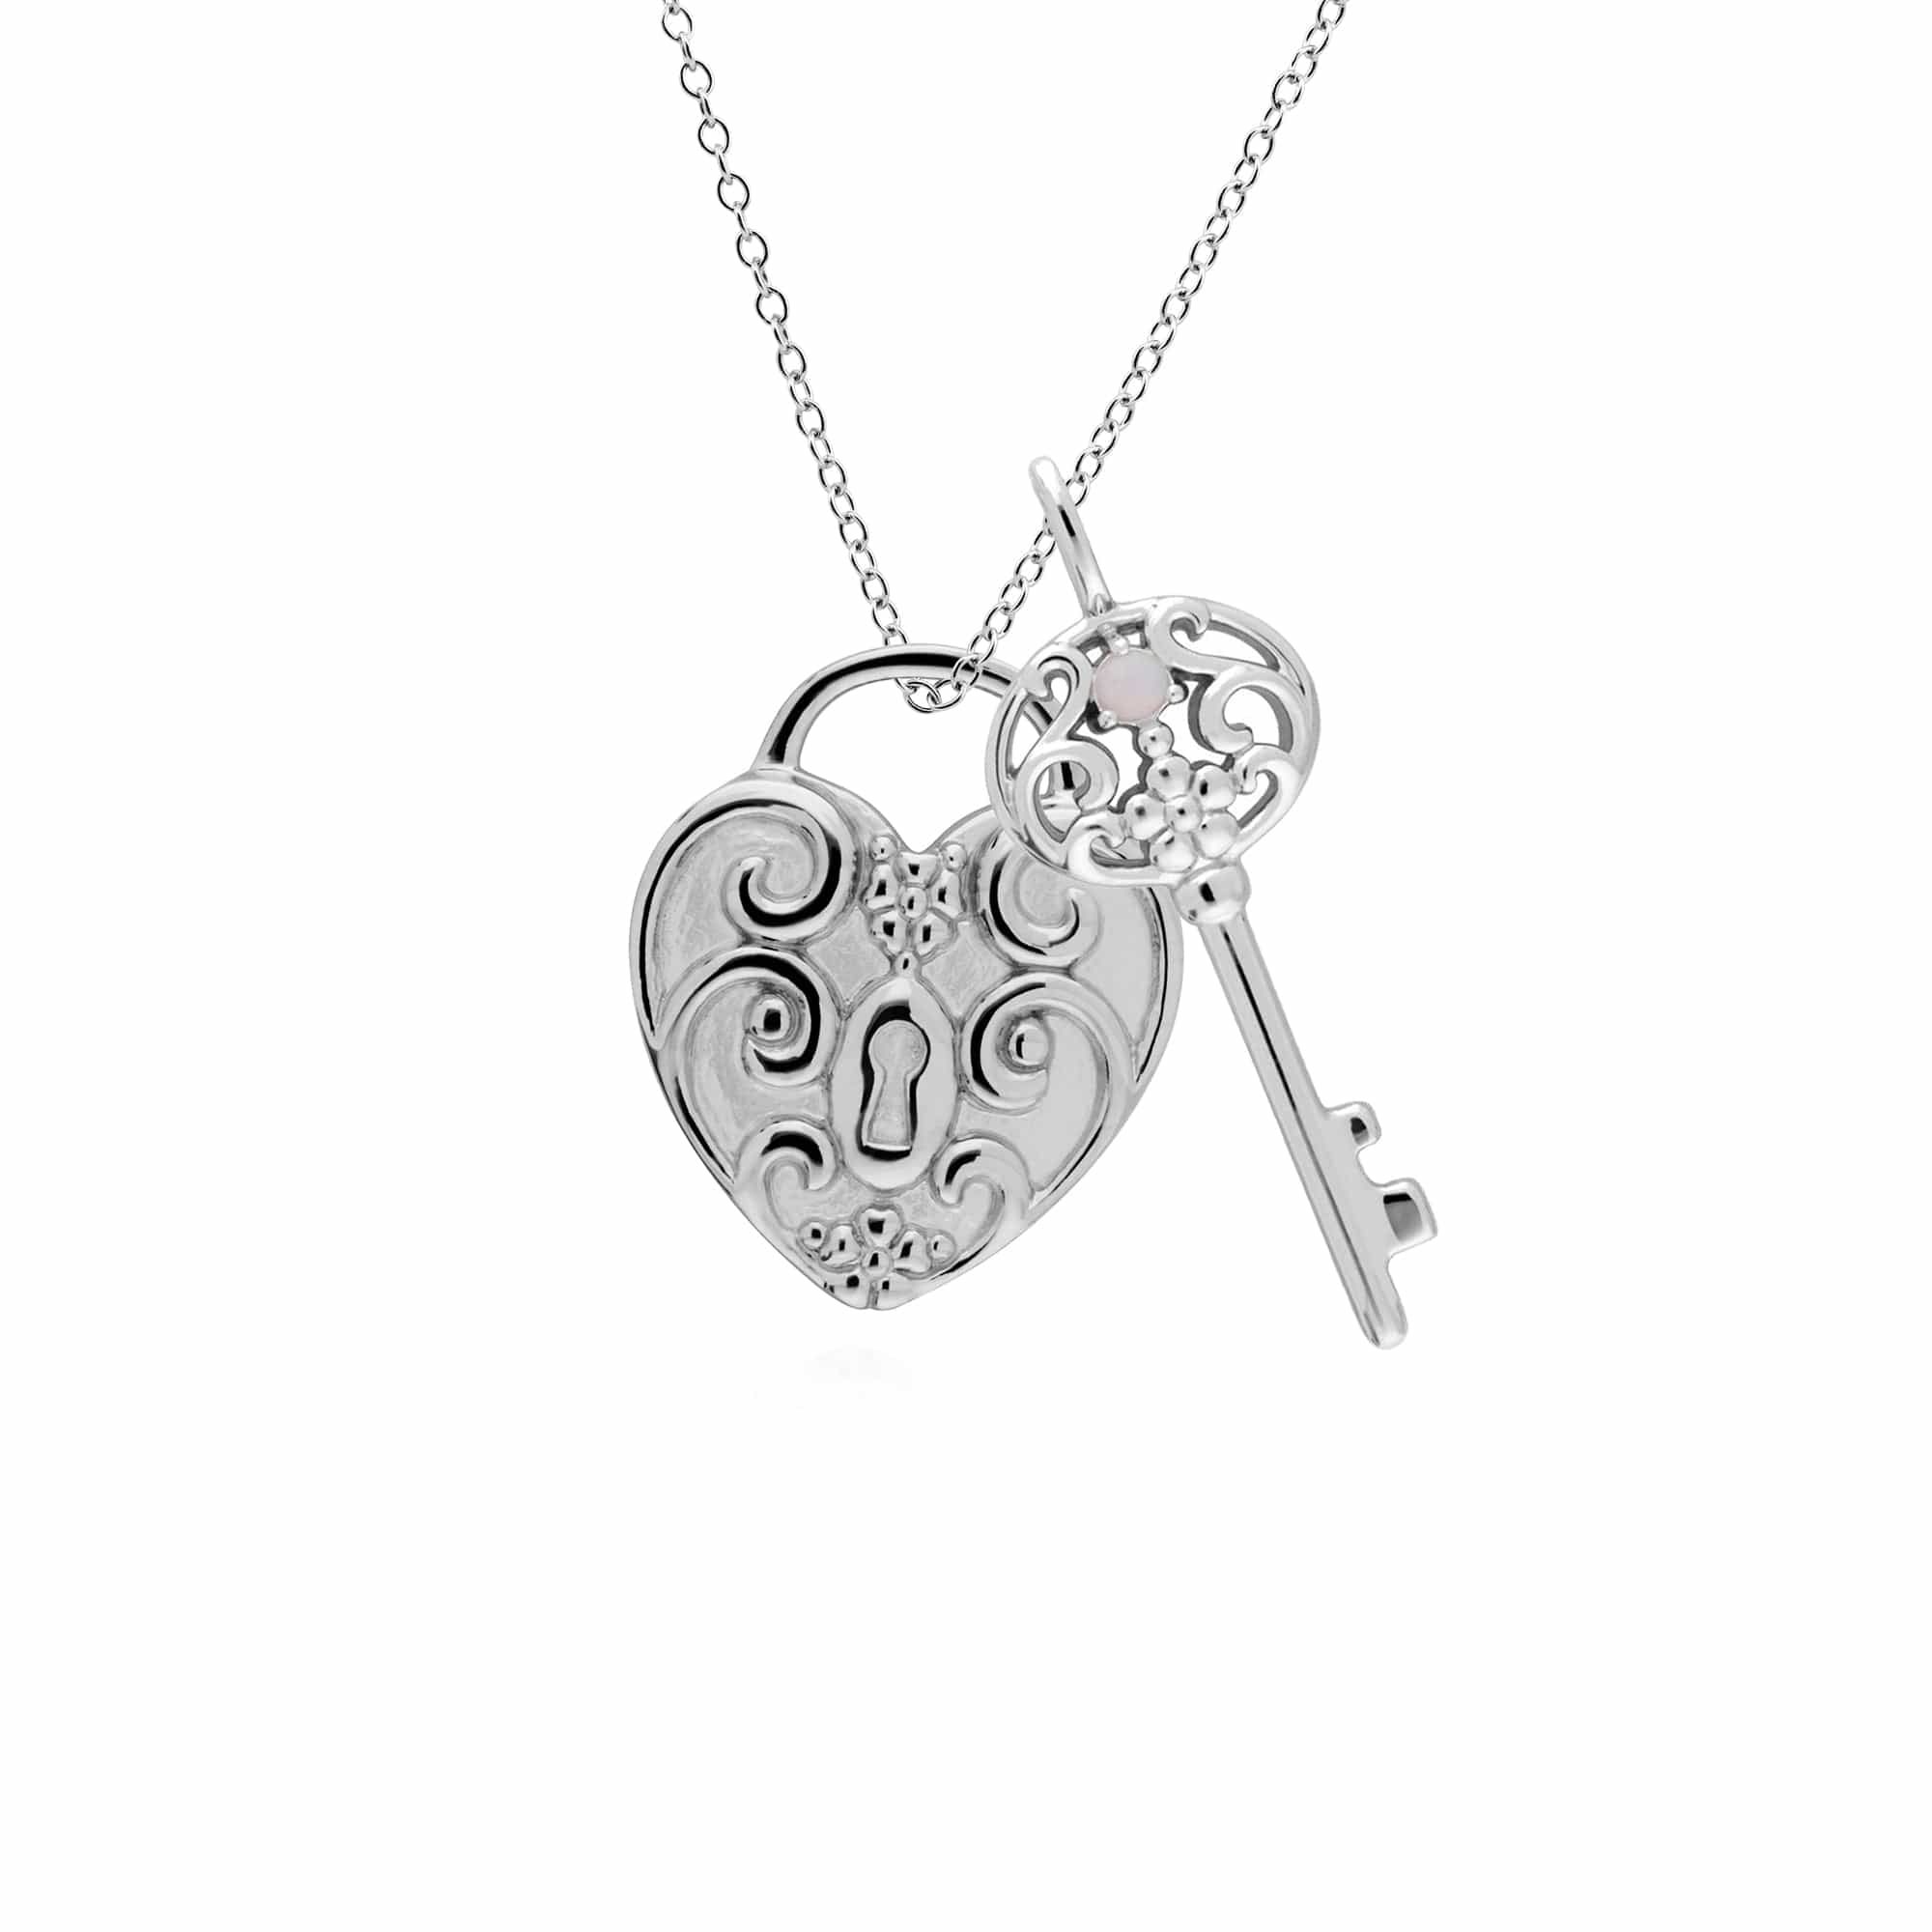 270P026803925-270P026601925 Classic Swirl Heart Lock Pendant & Opal Big Key Charm in 925 Sterling Silver 1